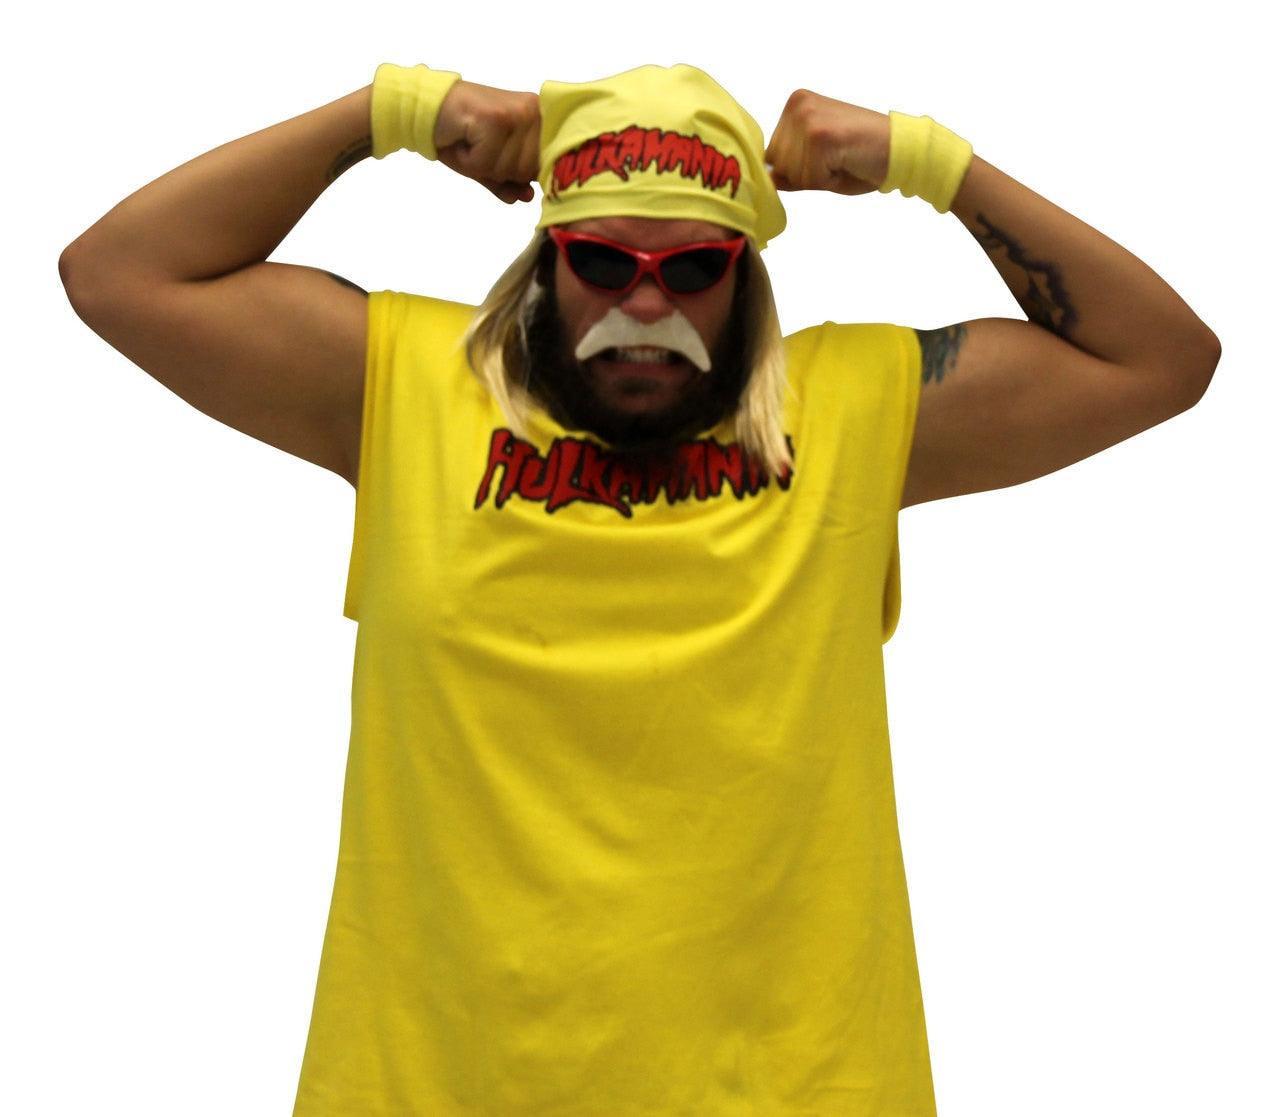 Men's Hulk Hogan Hulkamania Wrestler Costume